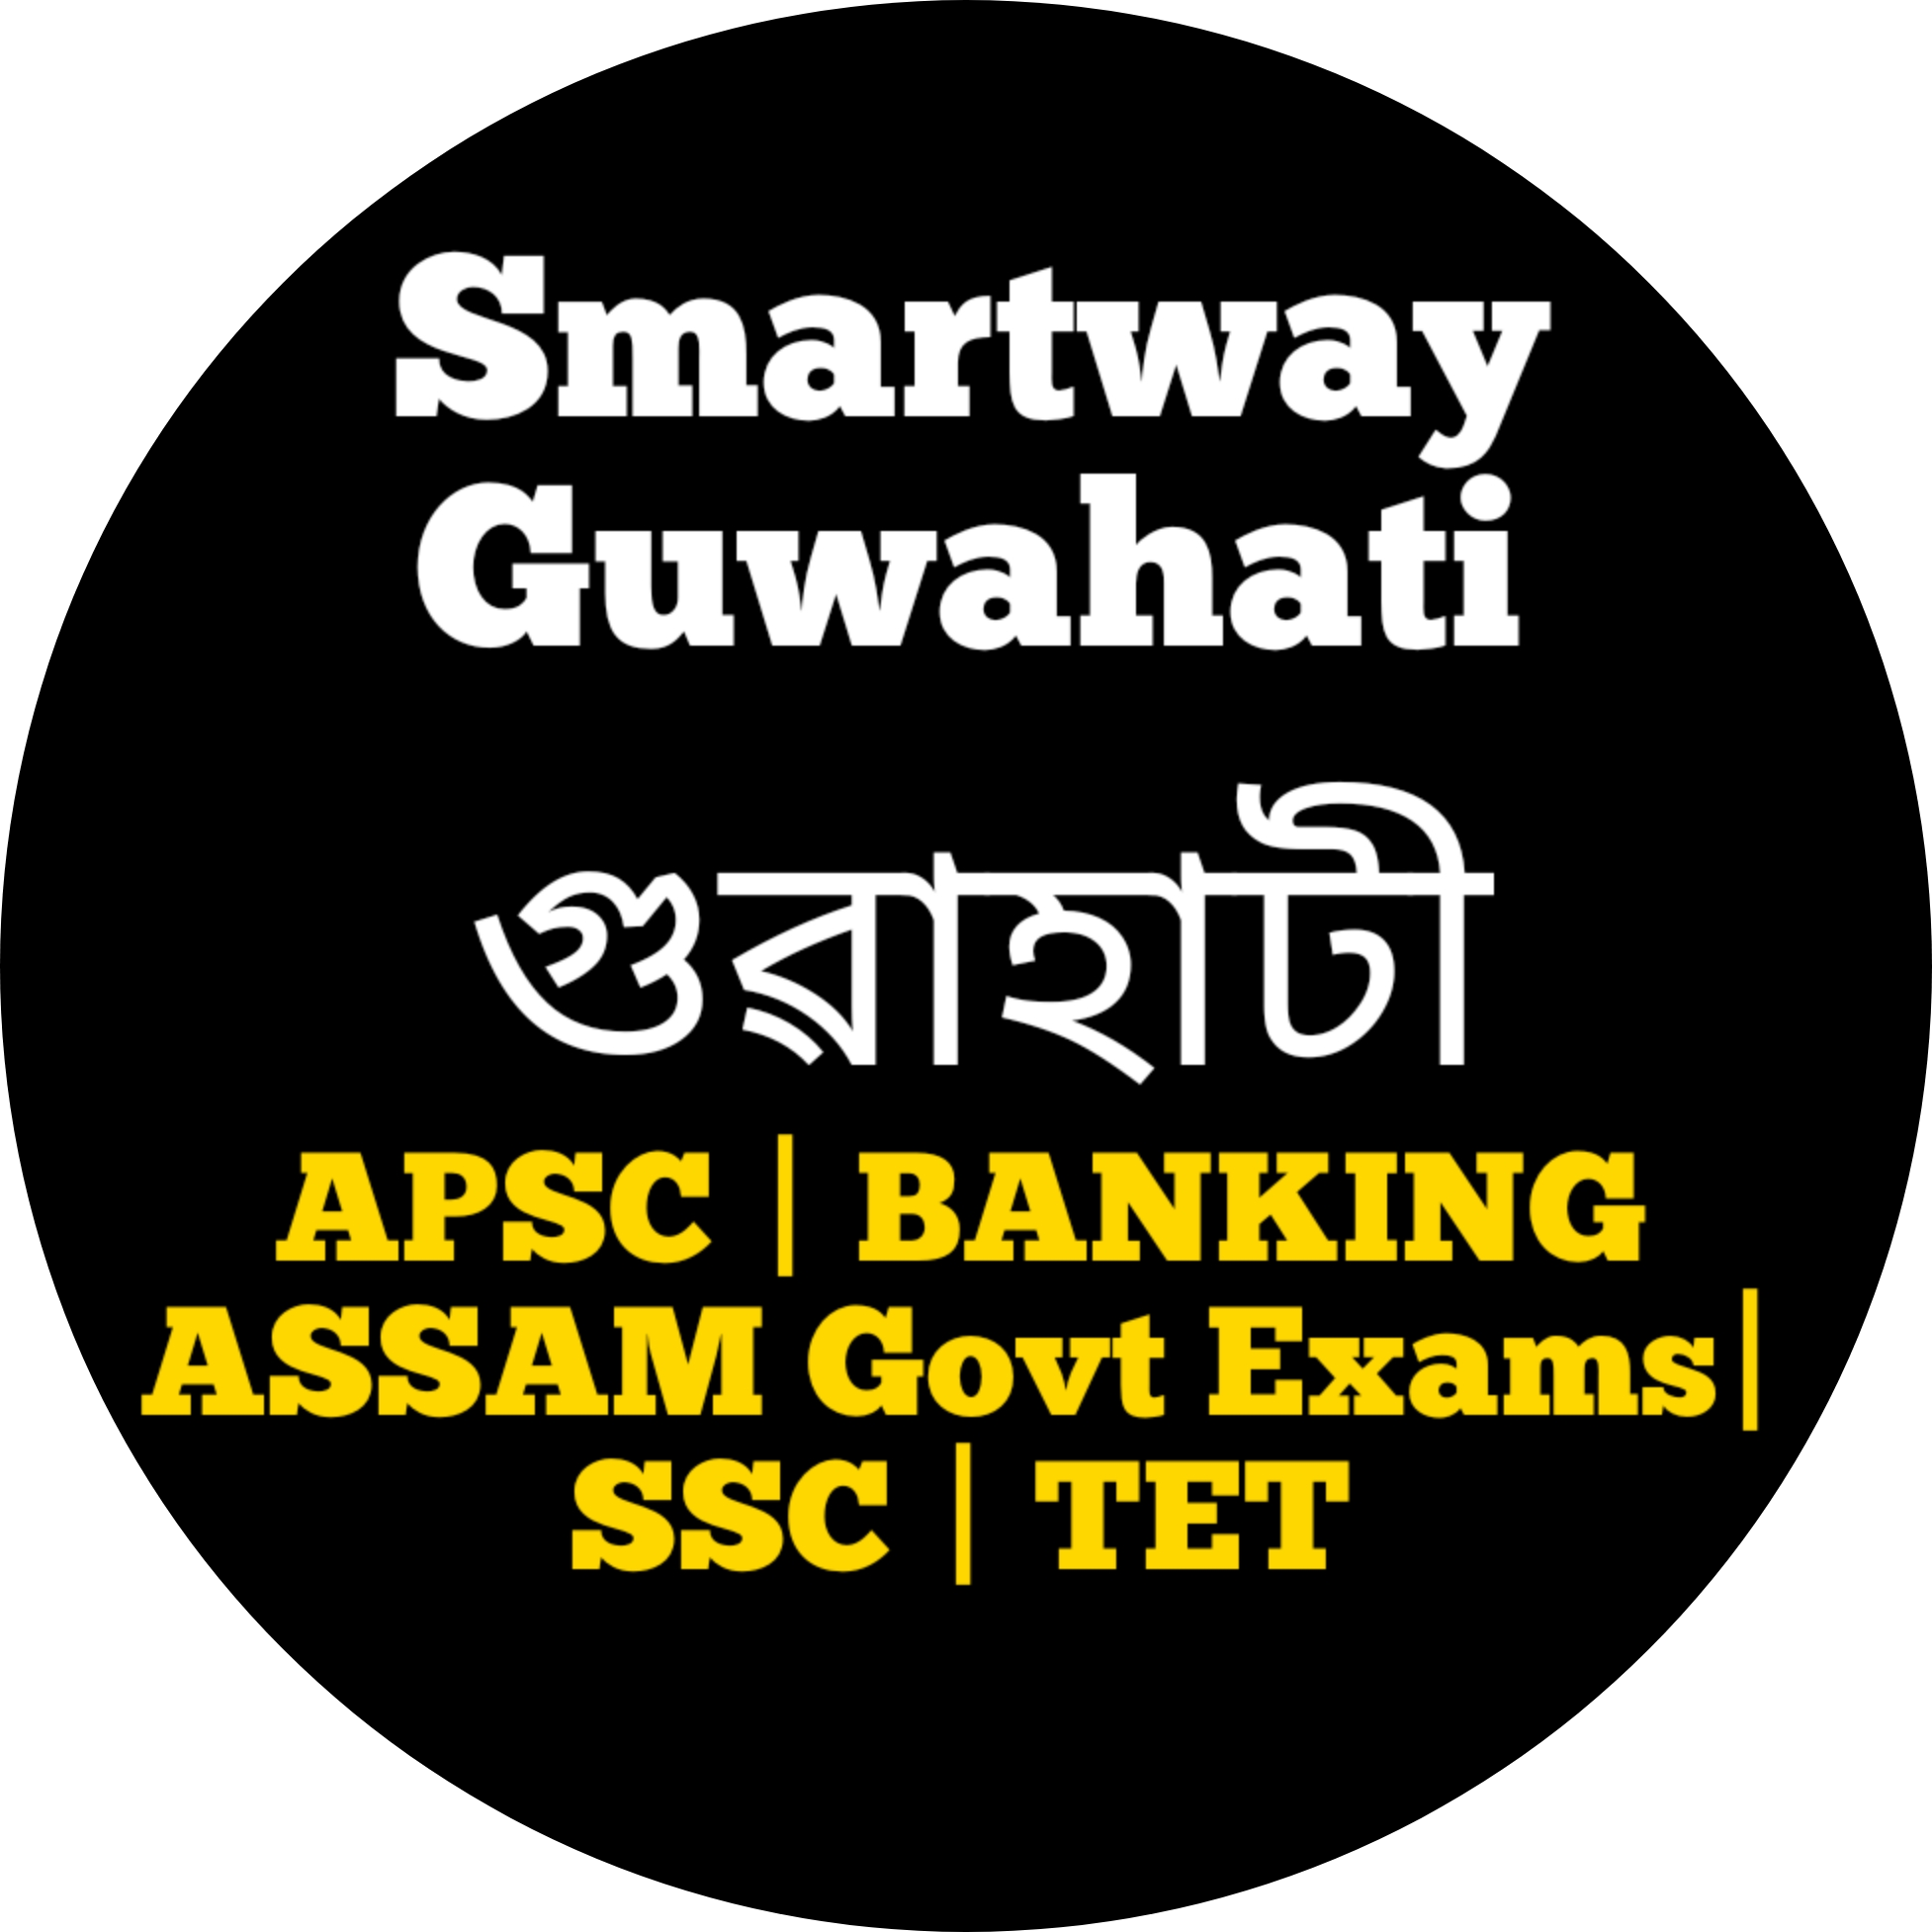 SMARTWAY Guwahati Logo